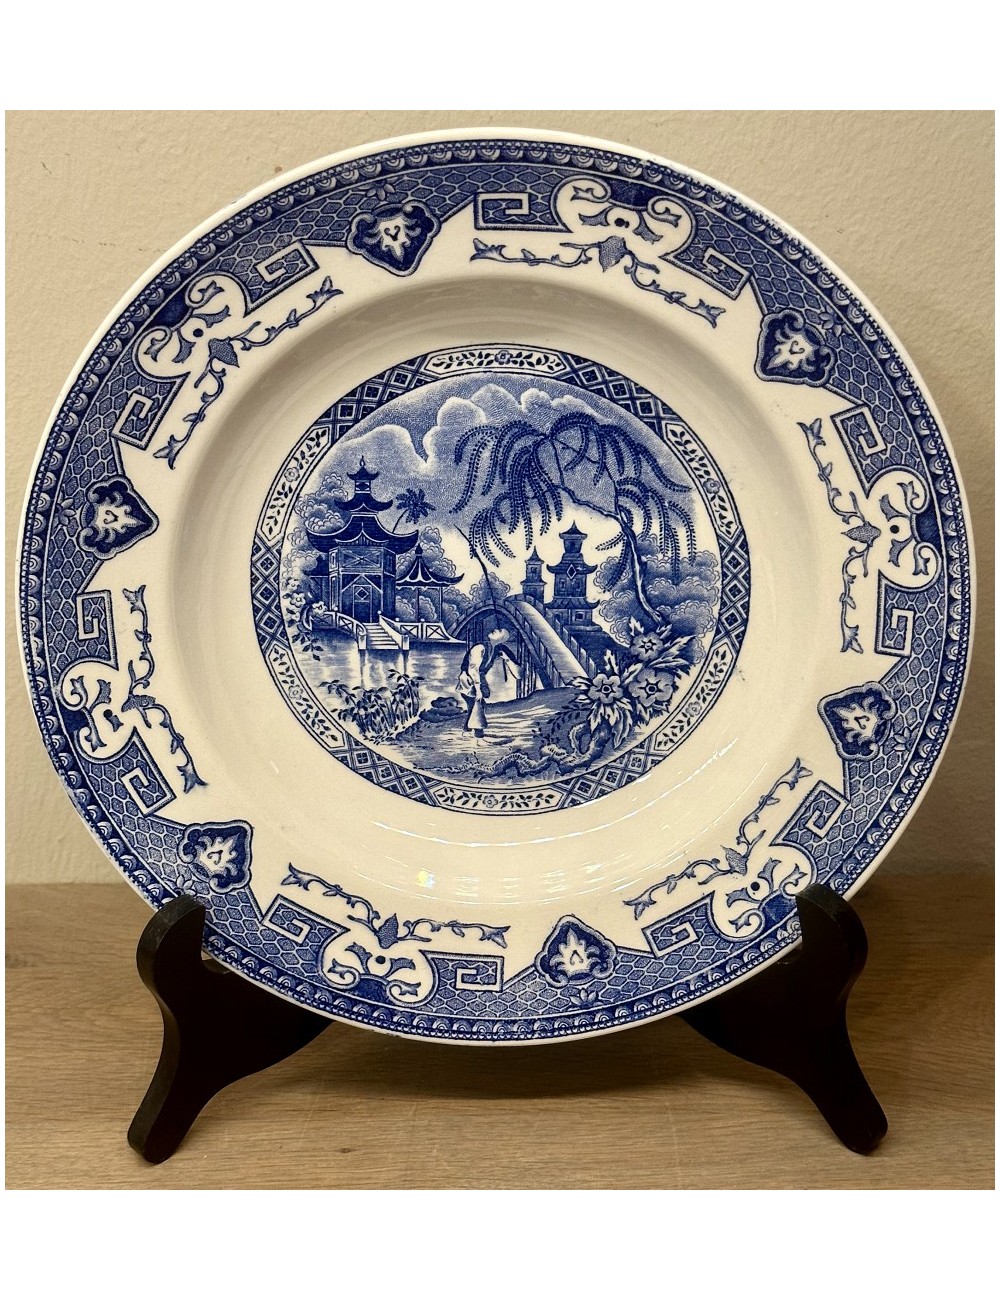 Deep plate / Soup plate / Pasta plate - Boch - décor YEDDO in blue version